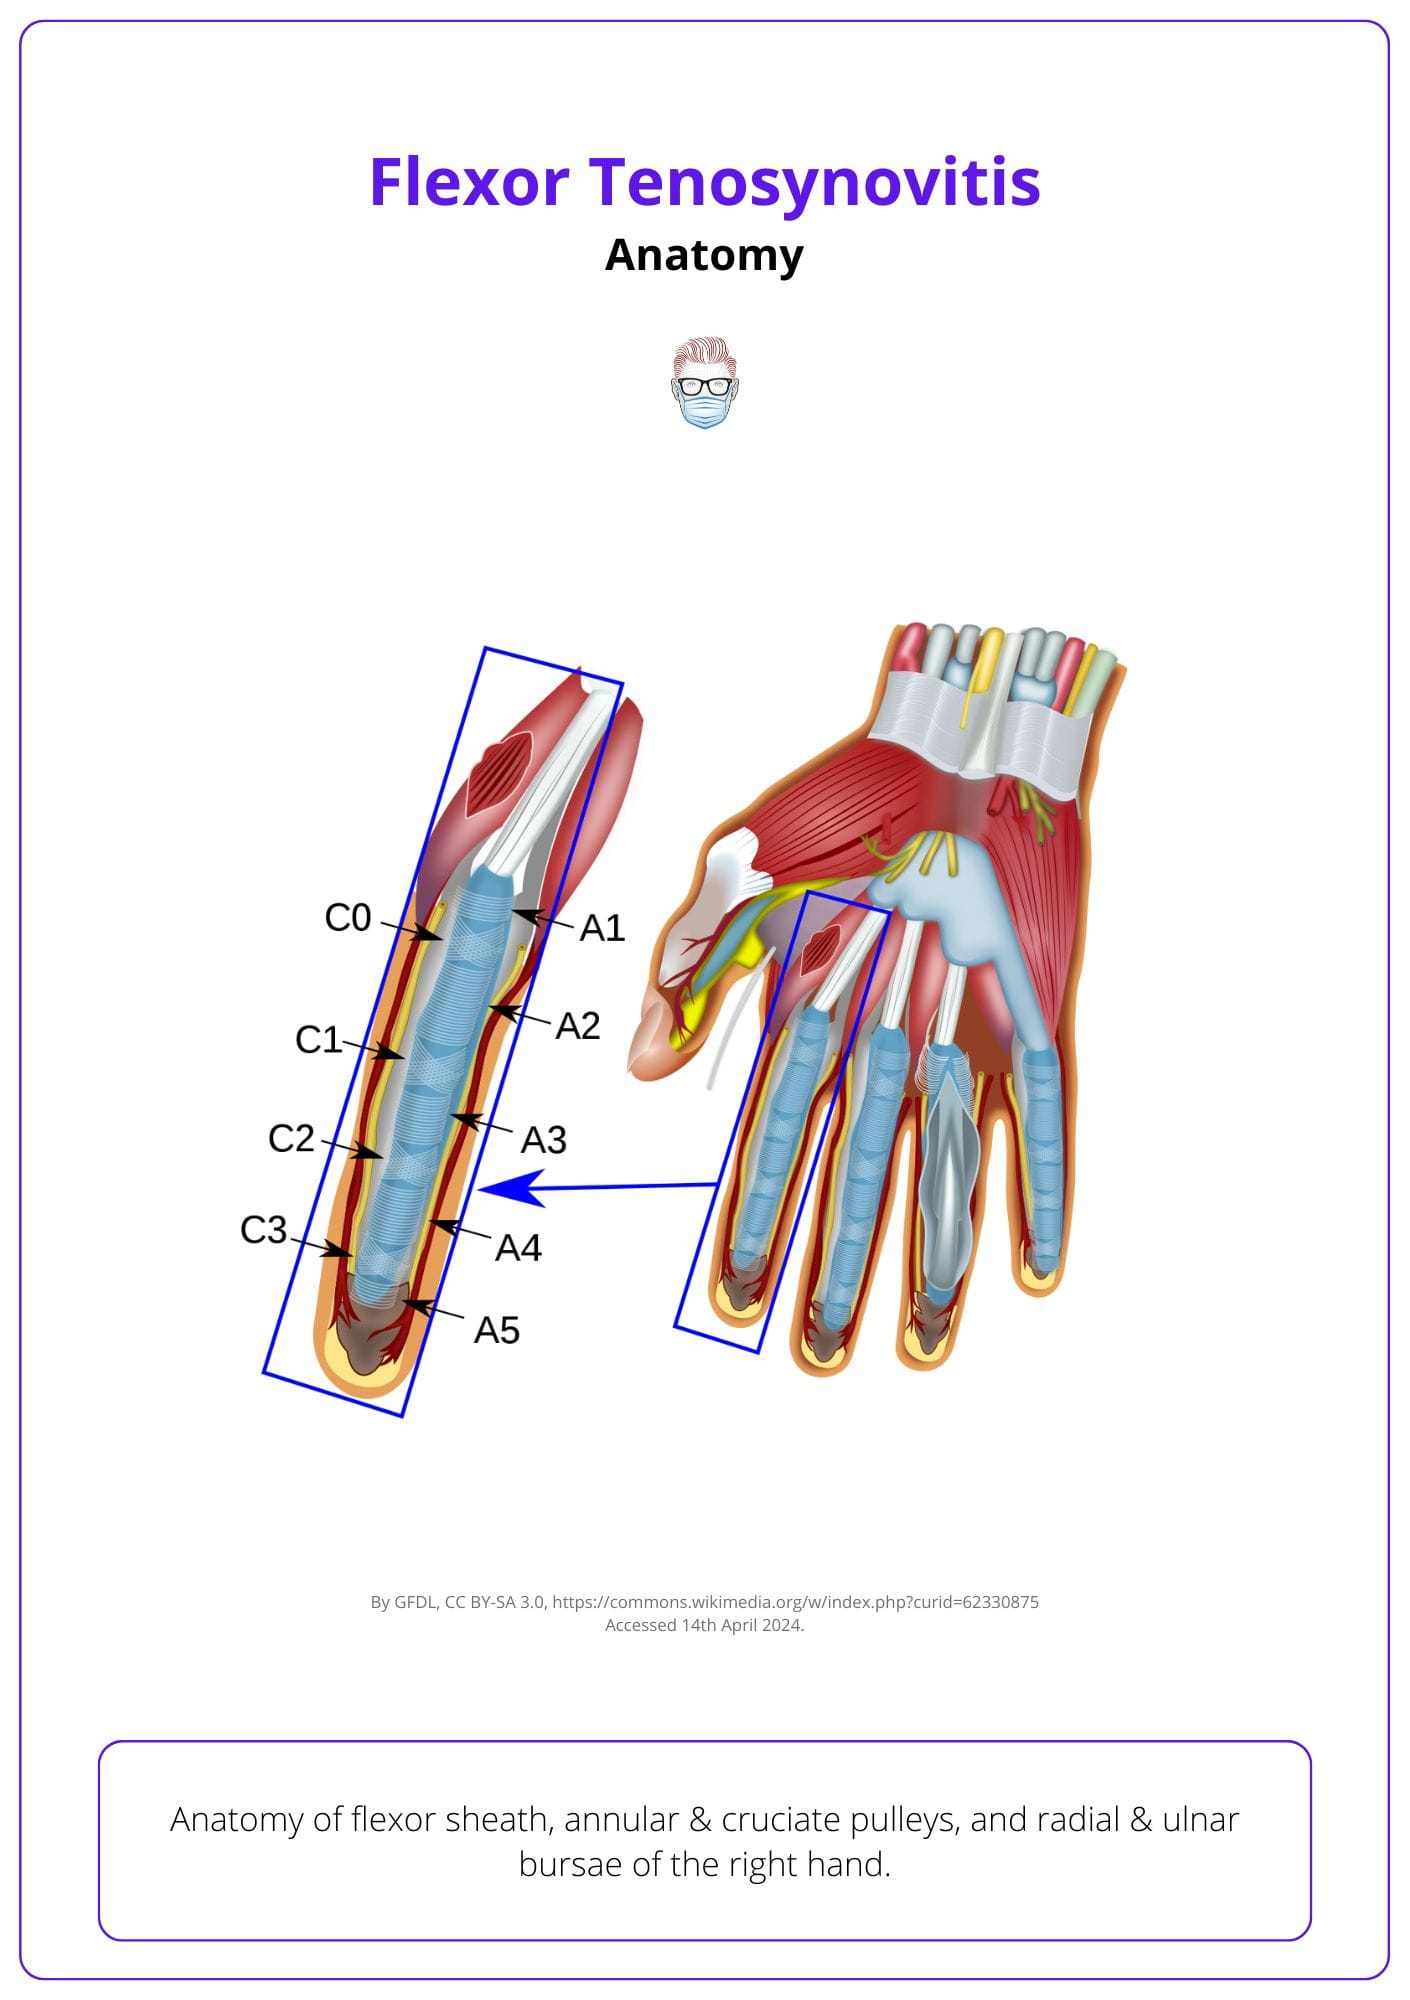 Flexor Sheath Anatomy of the right hand, including annular & cruciate pulleys, and radial & ulnar bursae. 